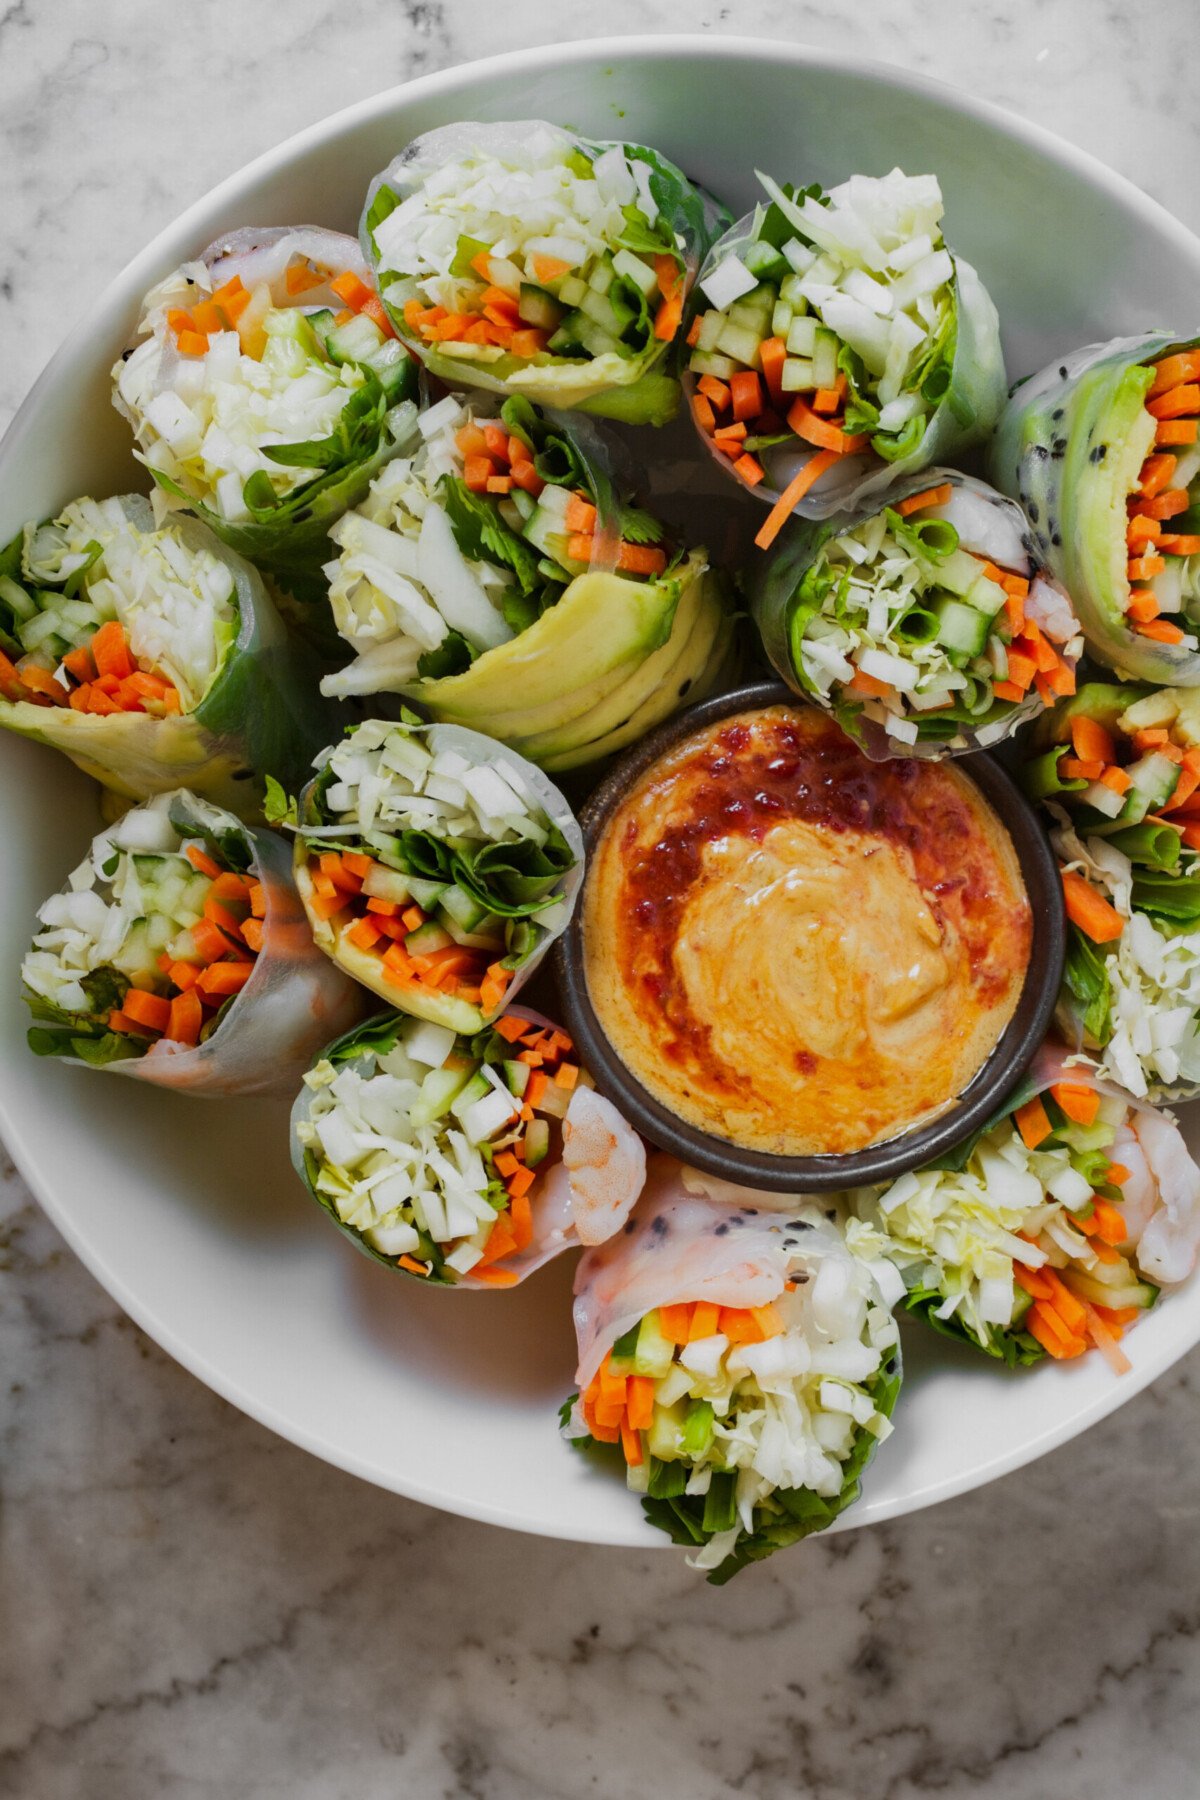 Vietnamese Spring Rolls with Almond Dipping Sauce | from Lauren Grant of Zestful Kitchen